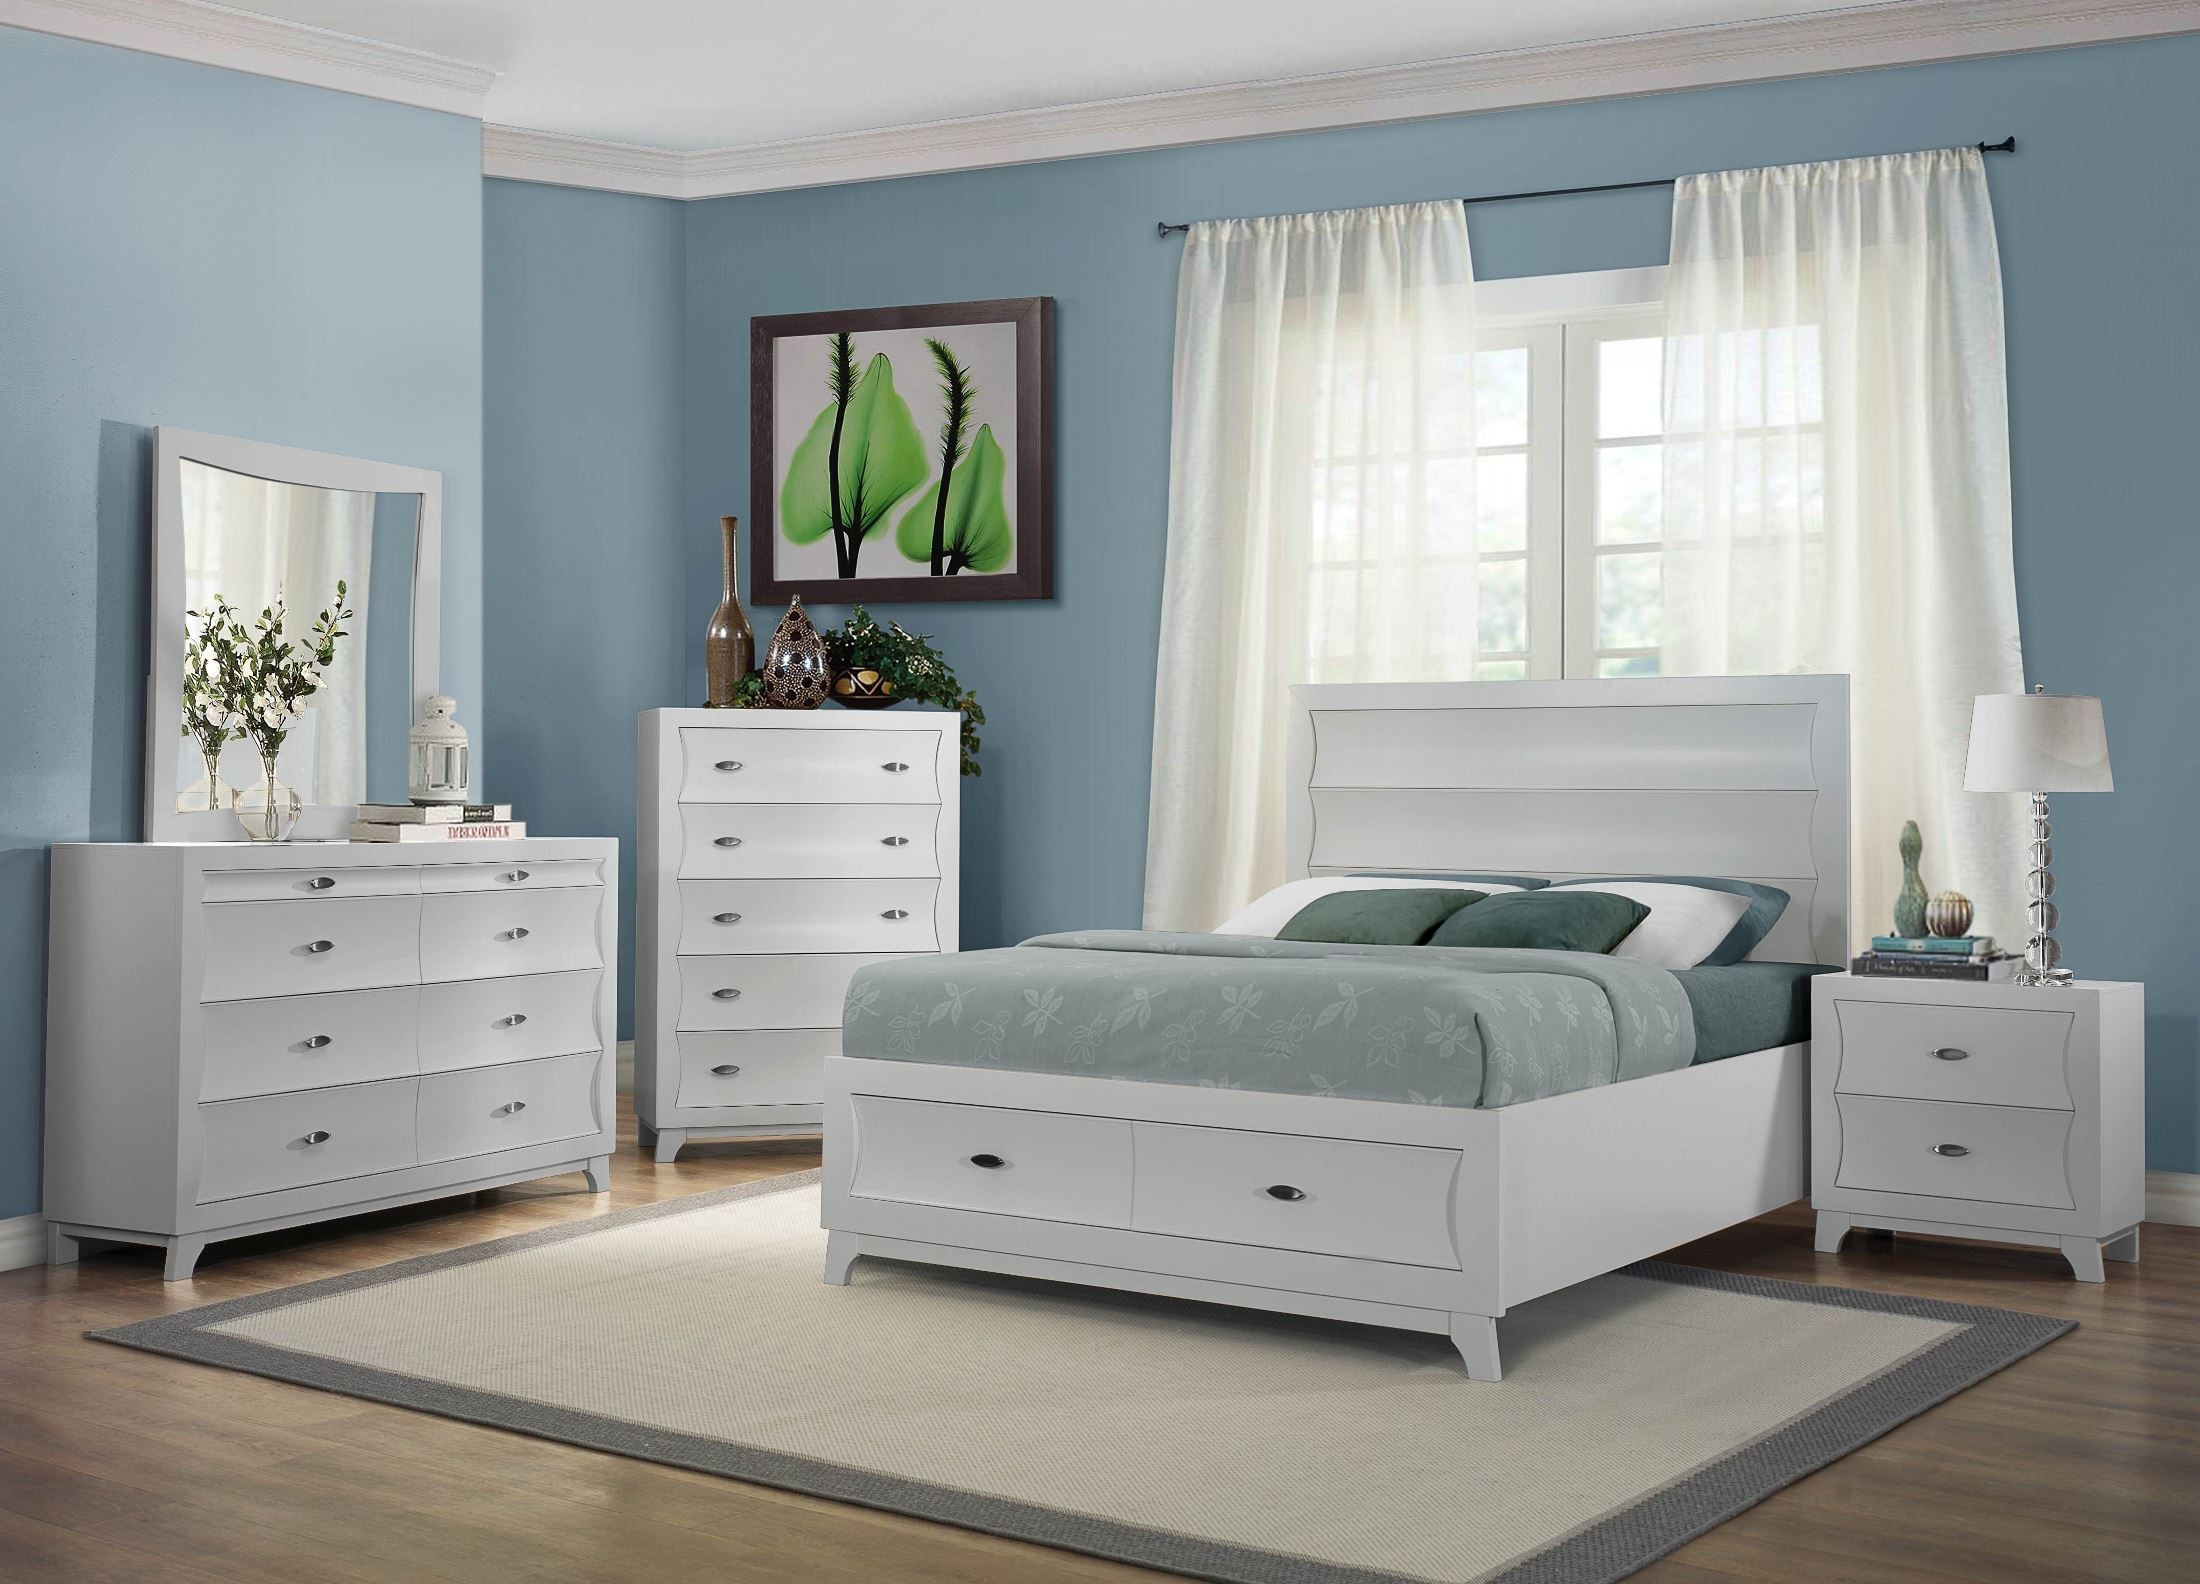 Storage Bedroom Furniture
 Zandra White Platform Storage Bedroom Set from Homelegance